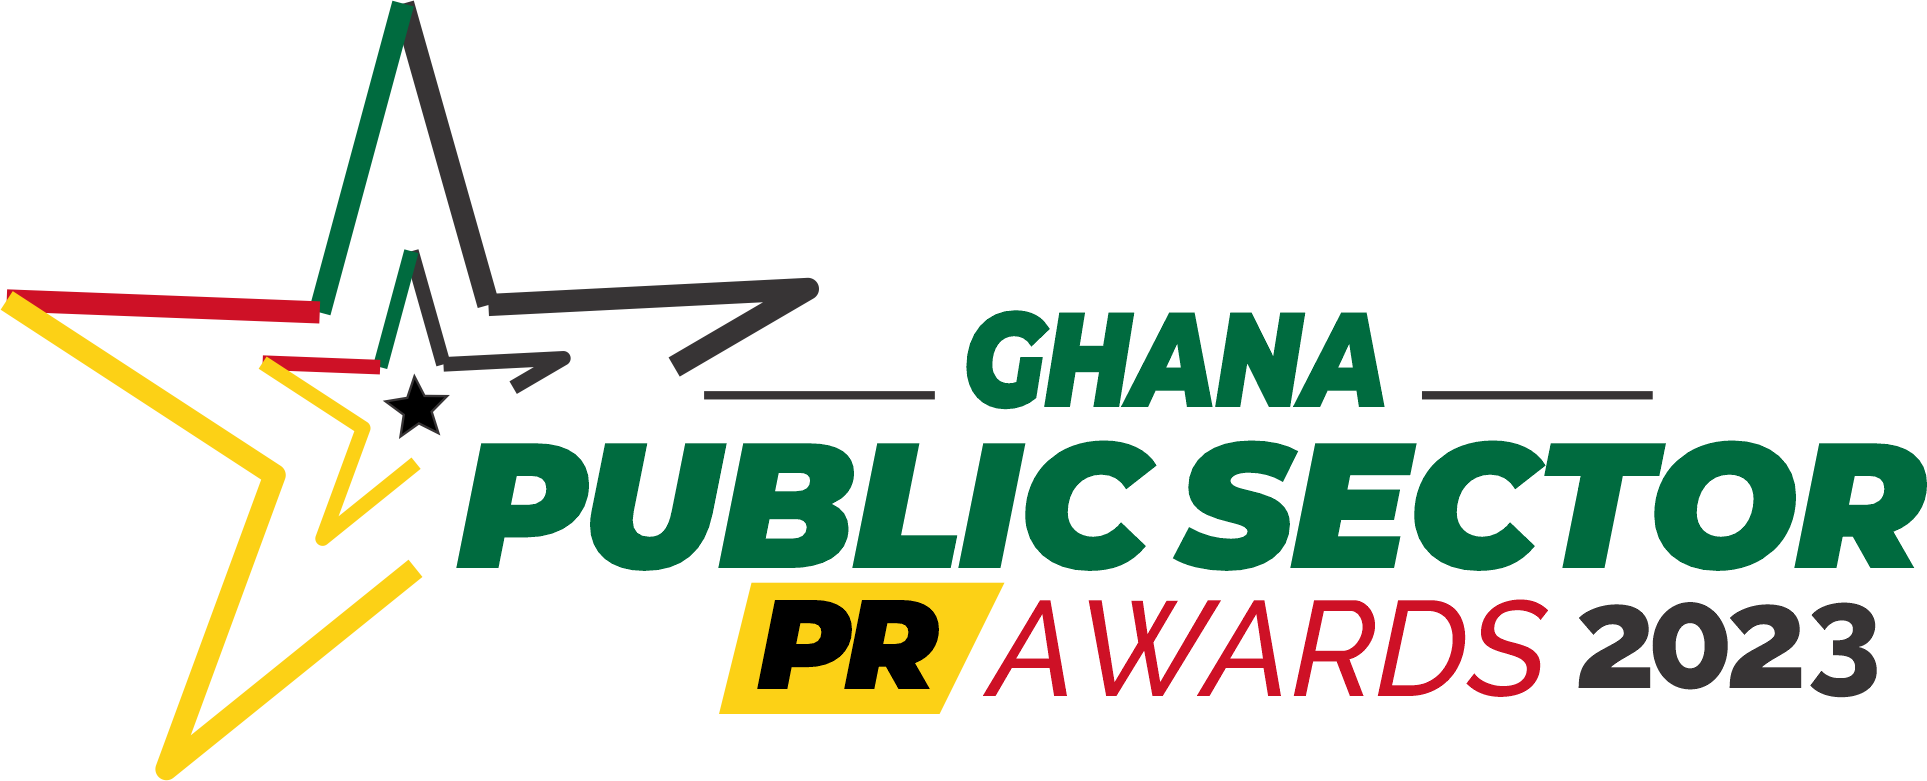 Ghana PR Awards